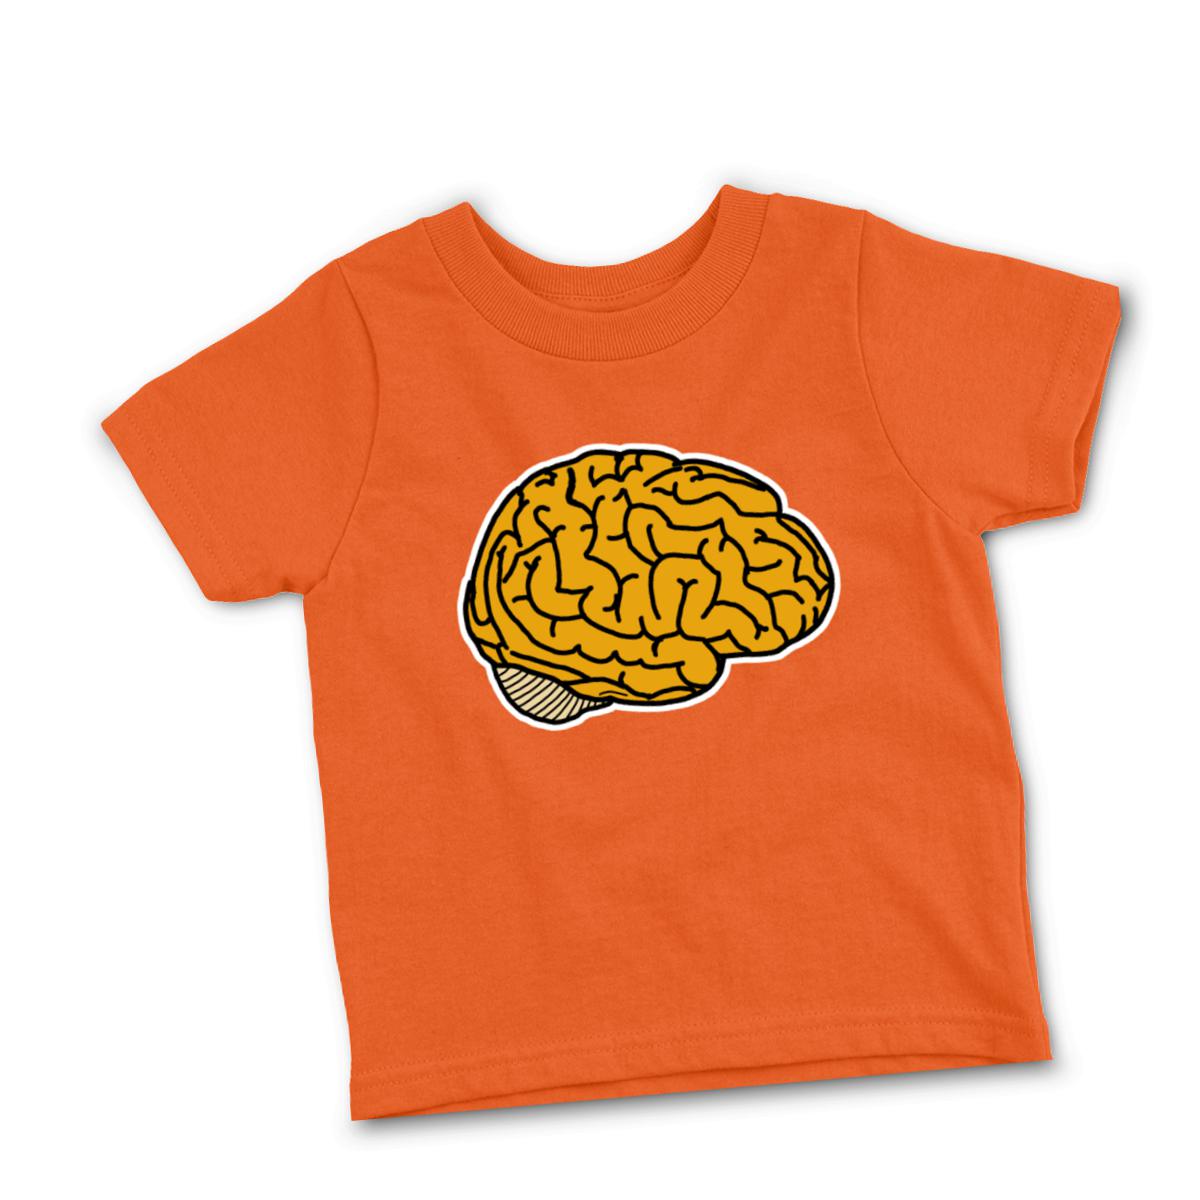 Illustrative Brain Infant Tee 24M orange